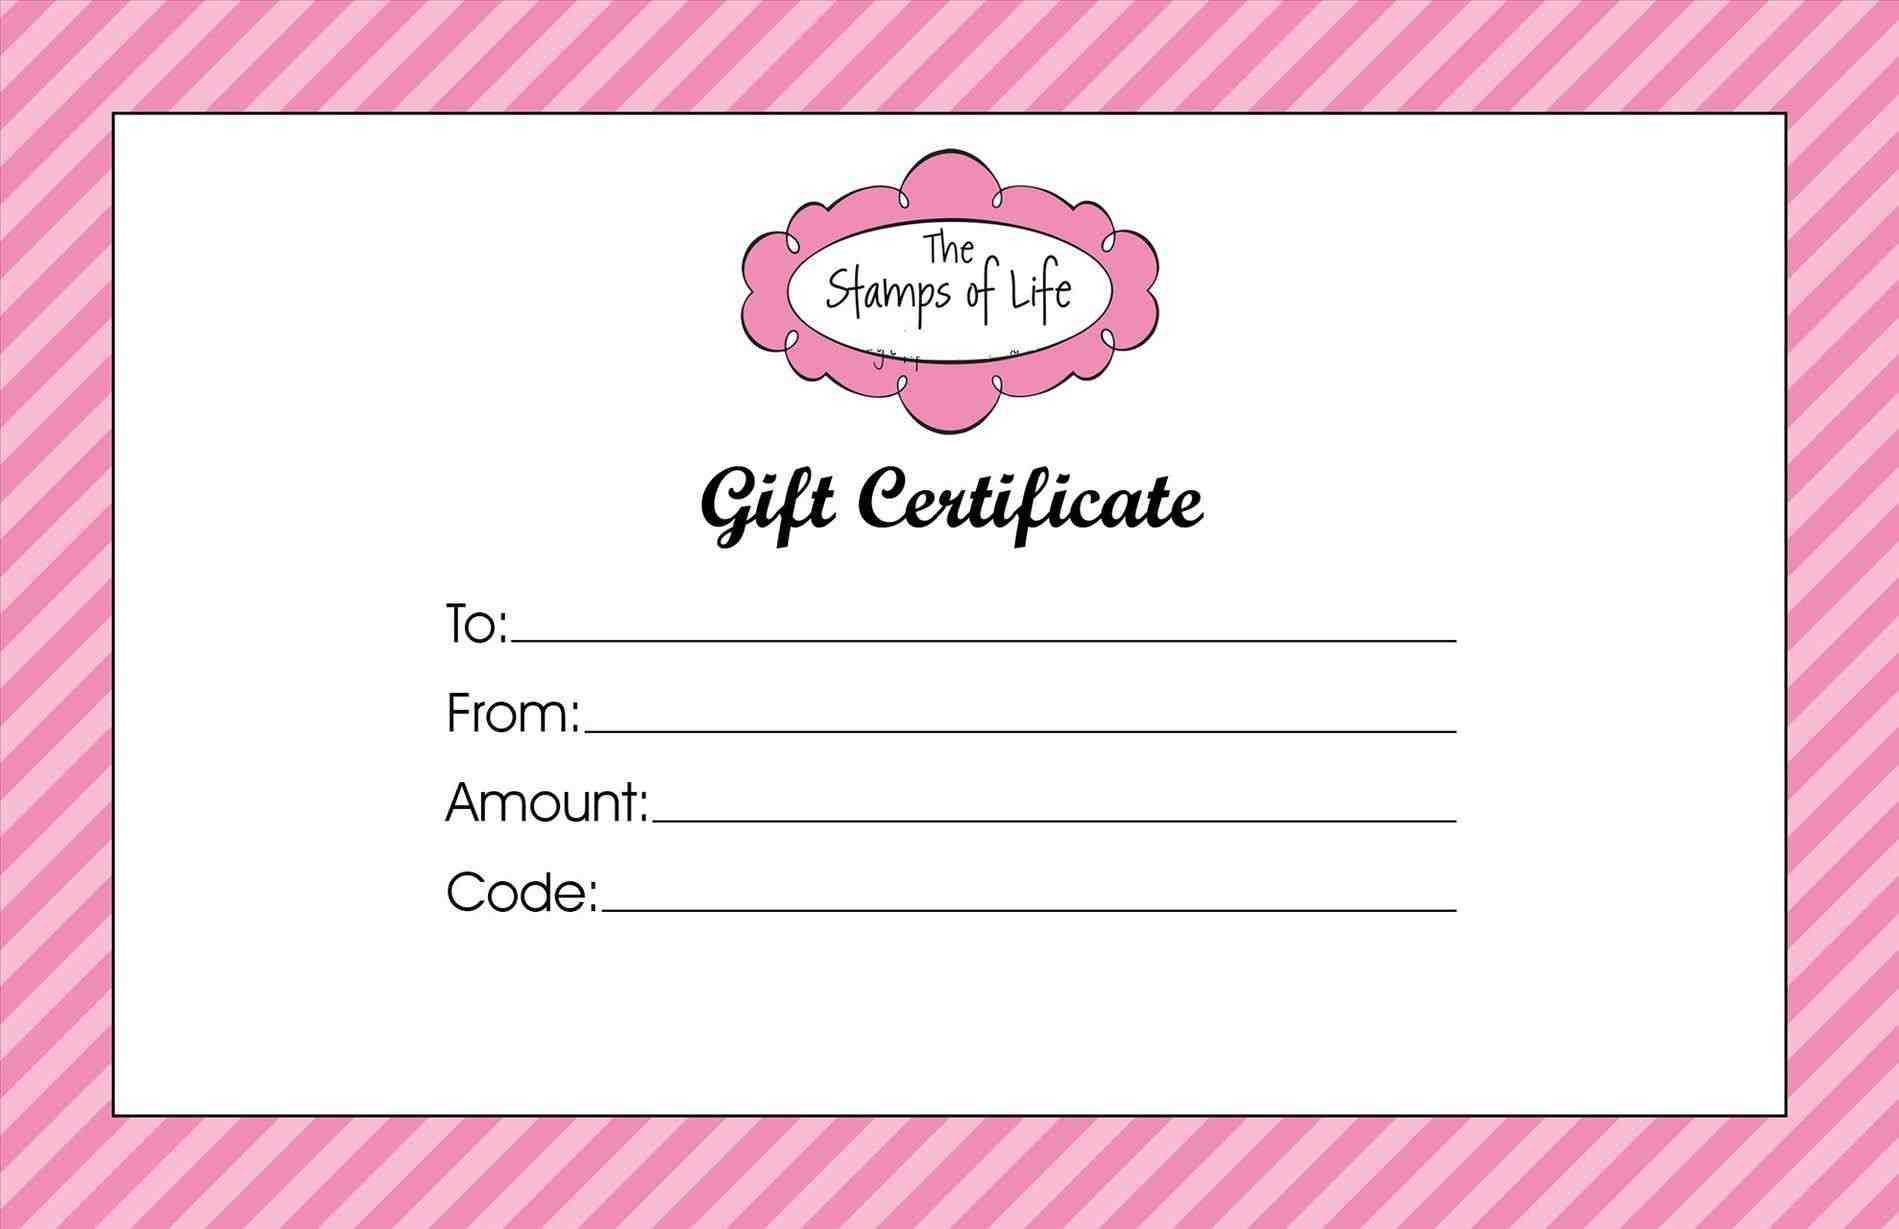 Clipart Gift Certificate Template Regarding Salon Gift Certificate Template